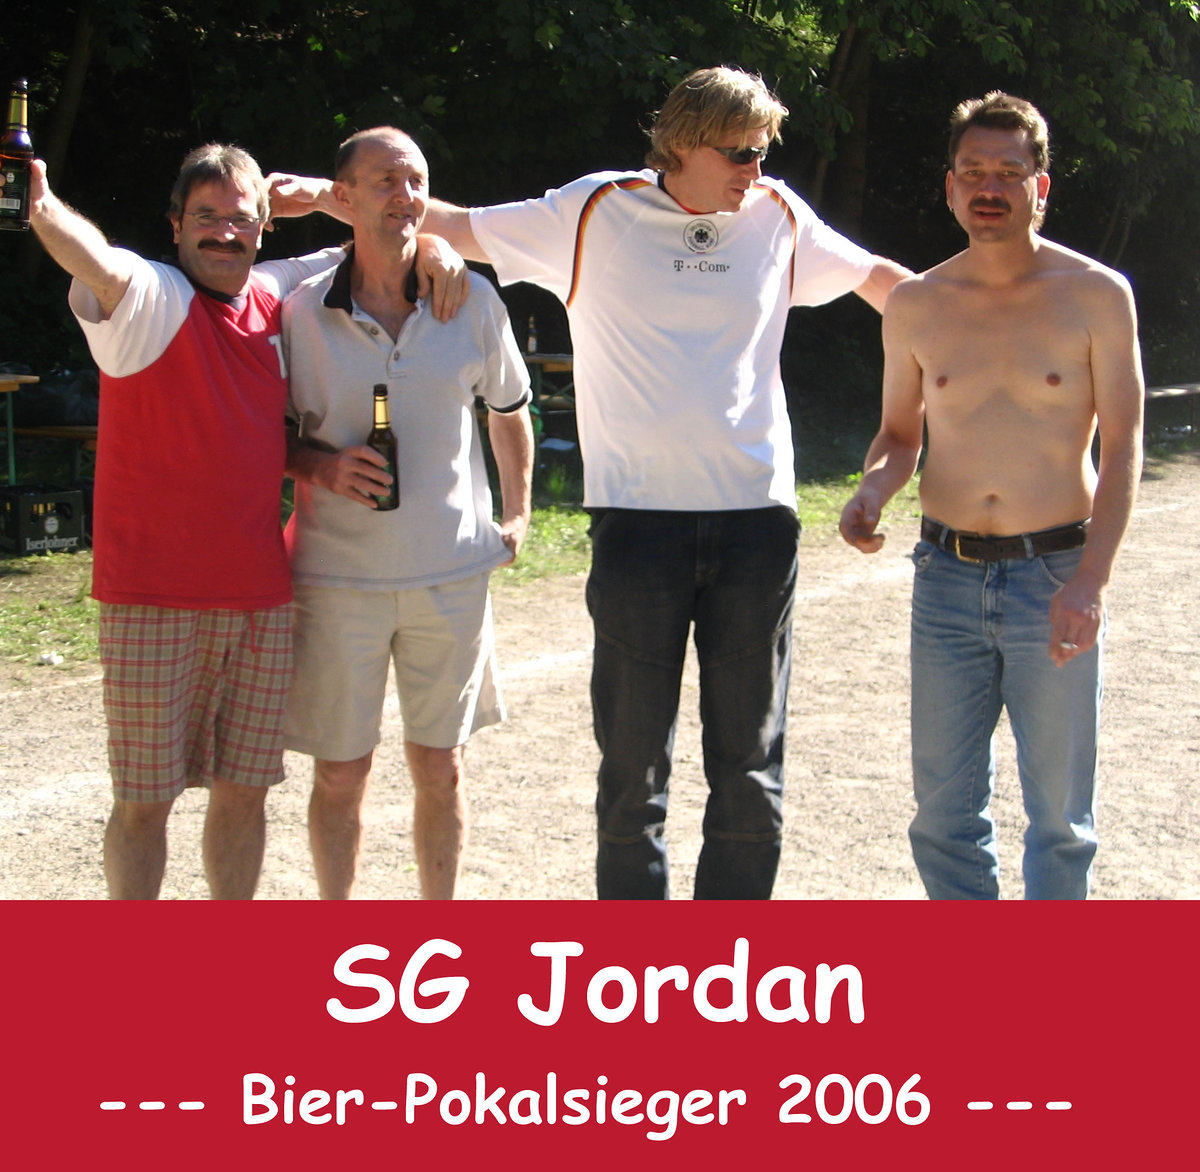 Its cup 2006   bierpokalsieger   sg jordan retina